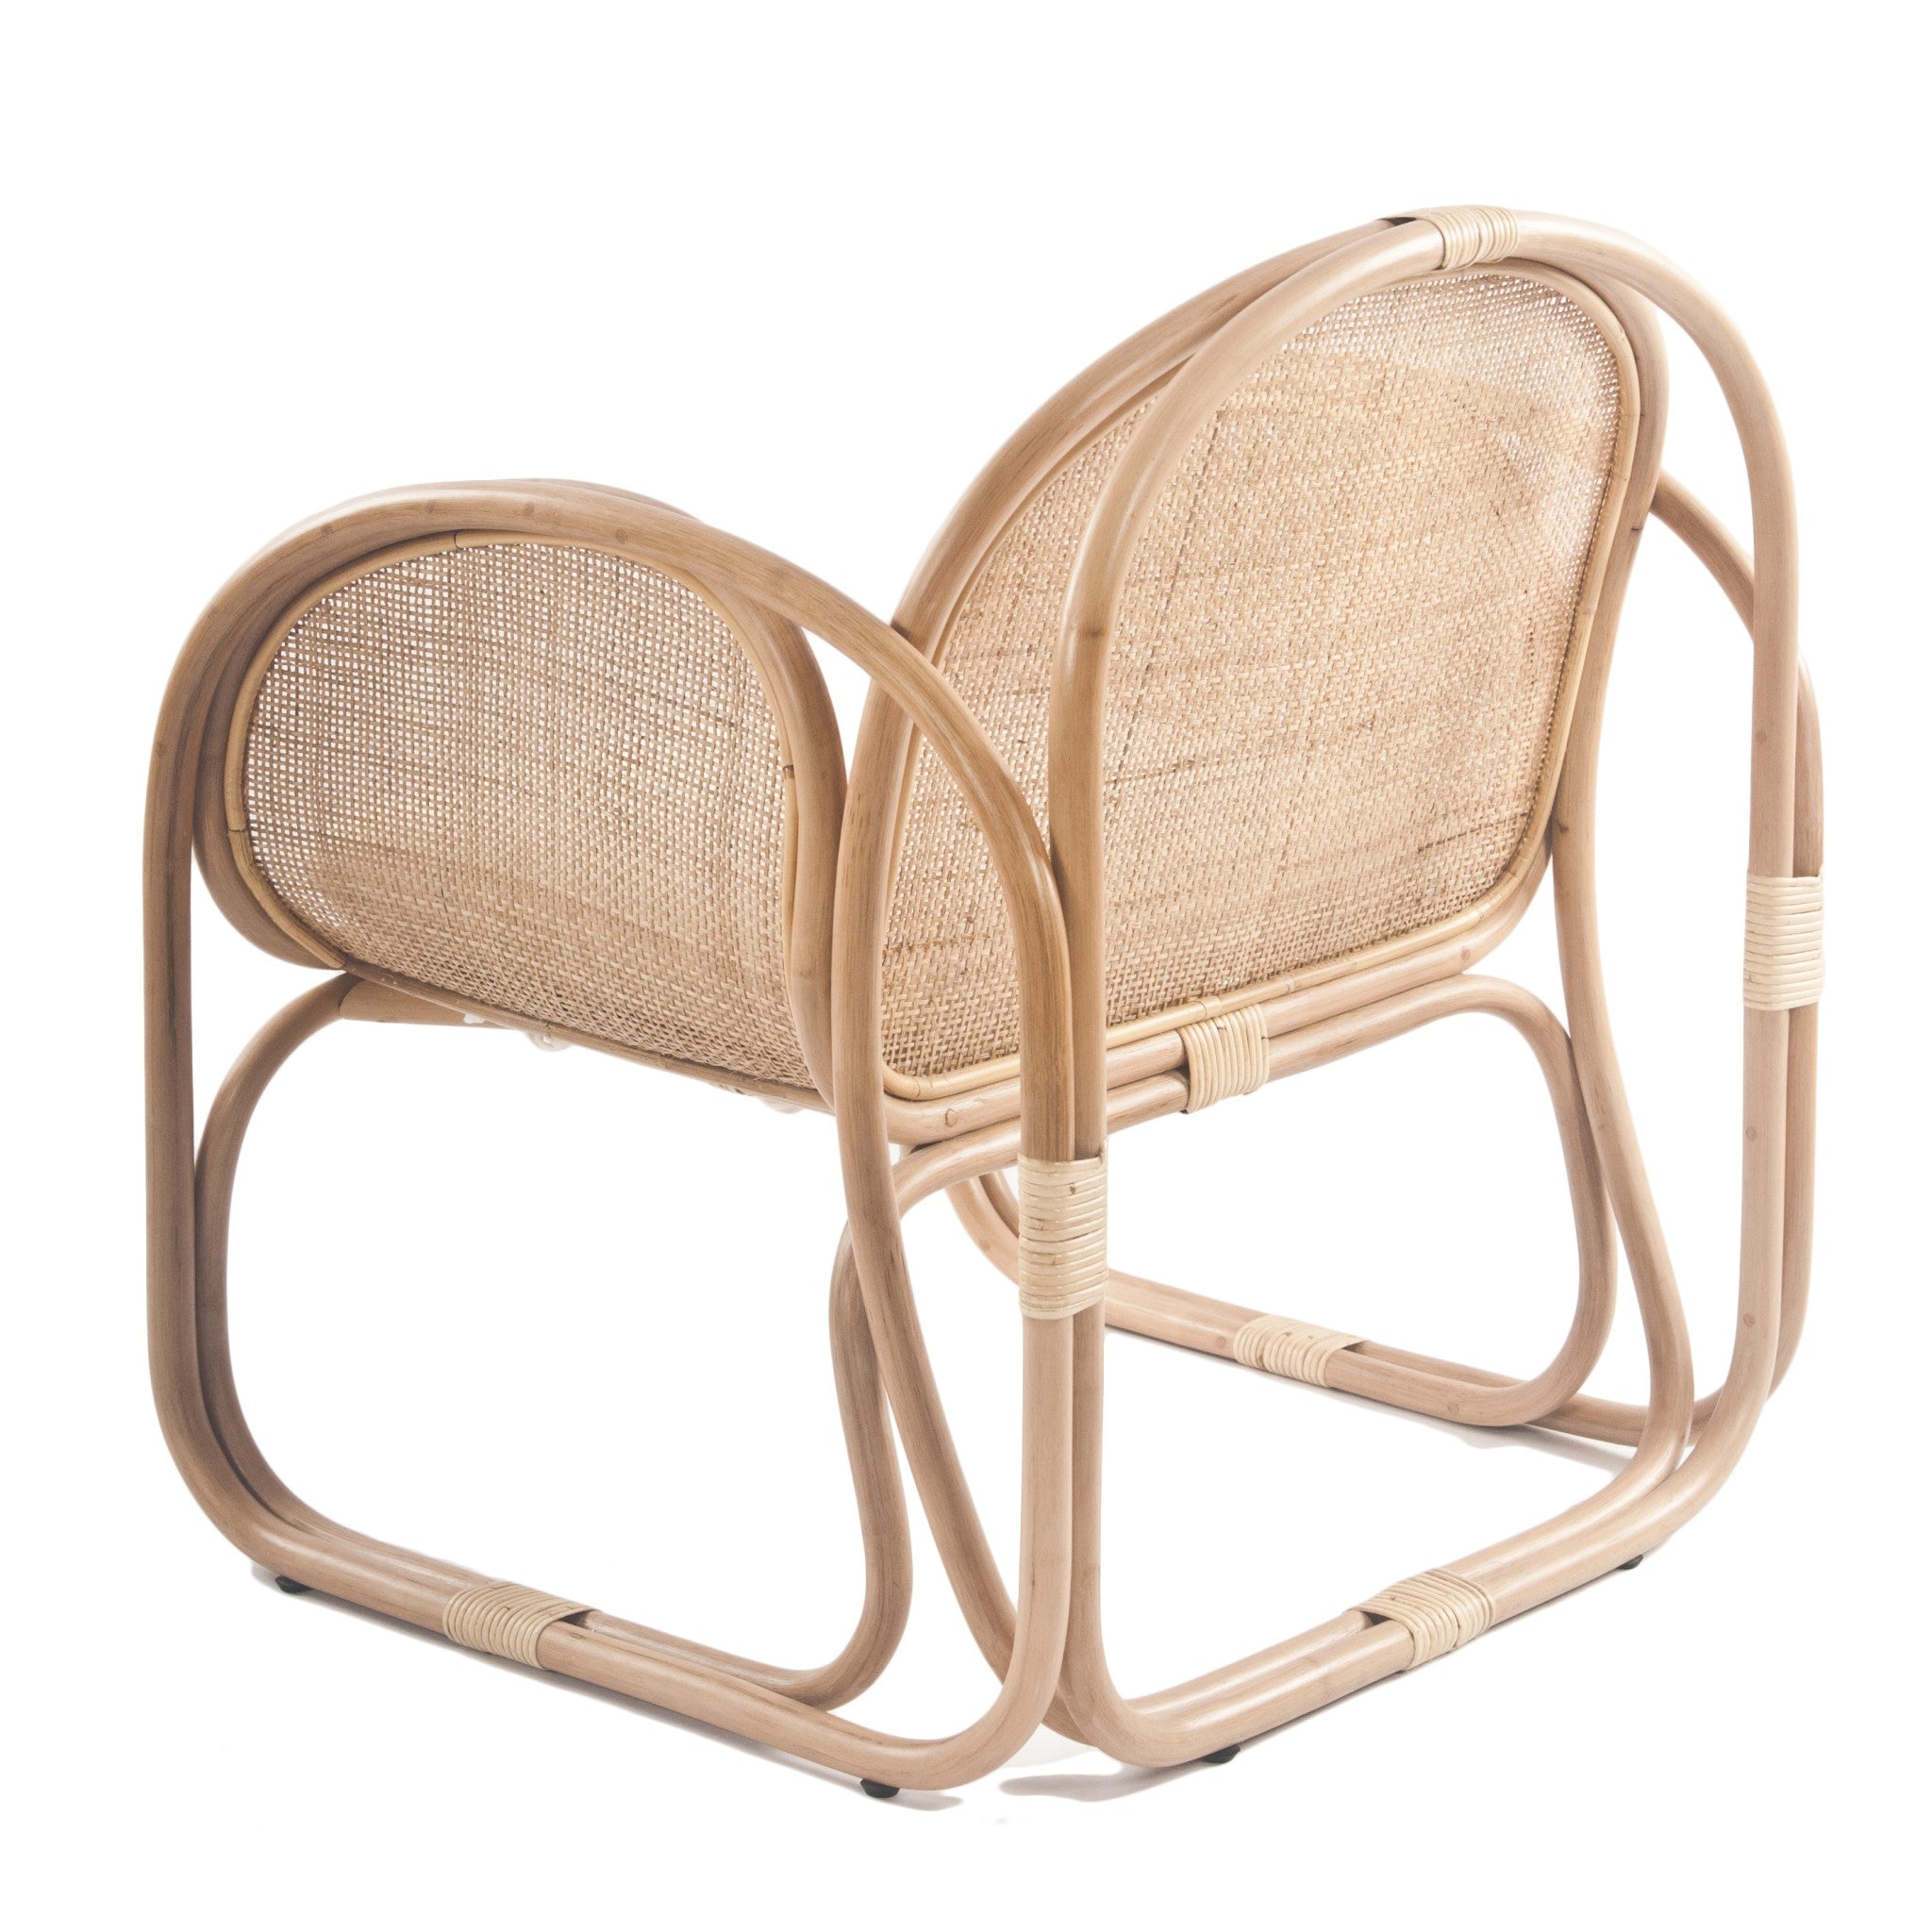 Bermuda Rattan Lounge Chair with wicker weave Back - The Rattan Company